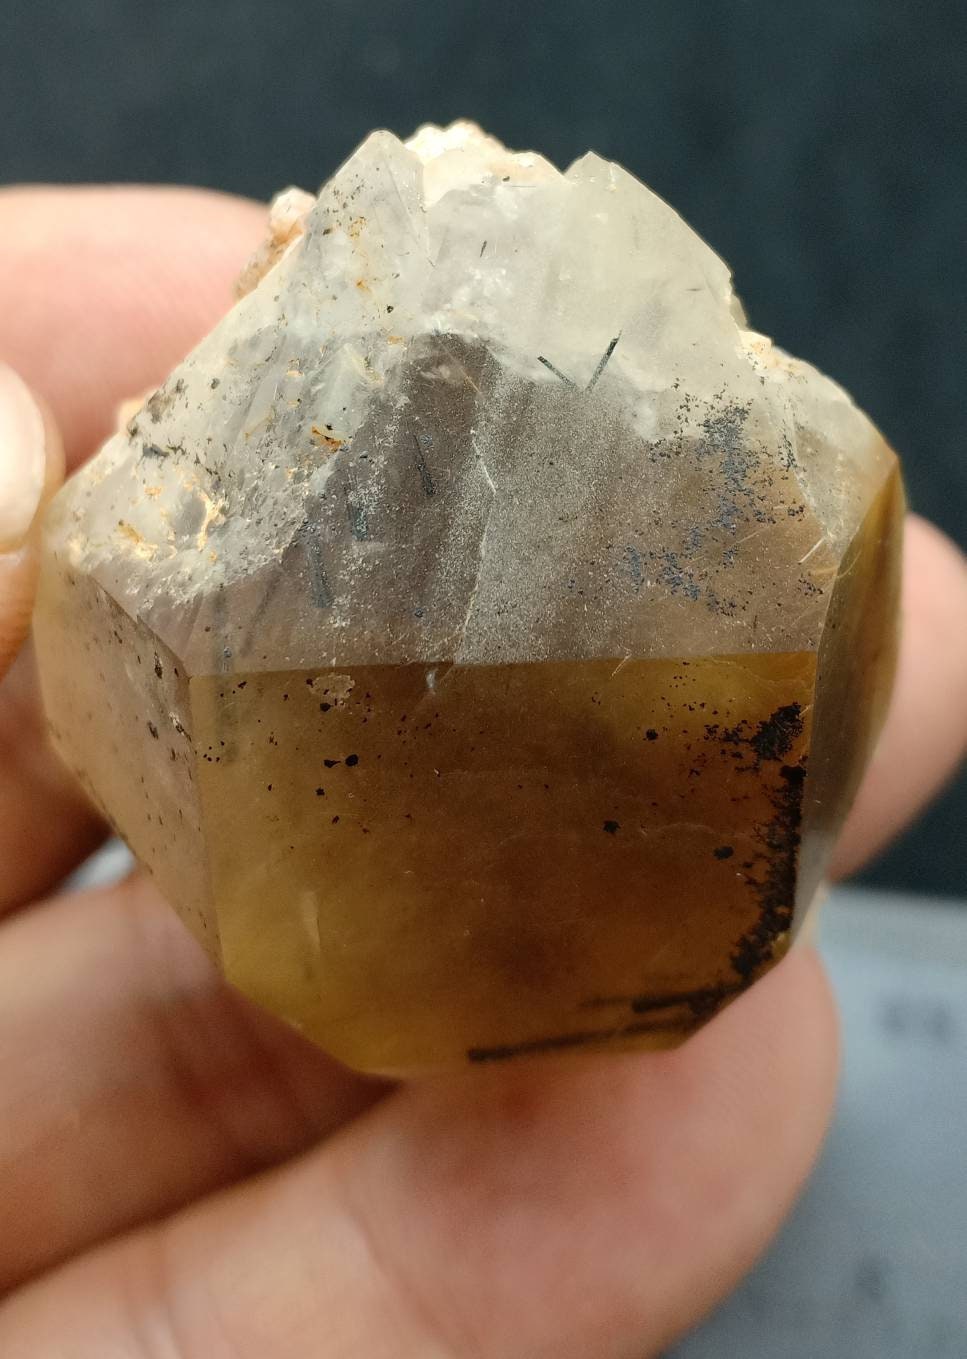 An amazing specimen of double Terminated aegirine and Astrophyllite included Quartz Crystal 60 grams